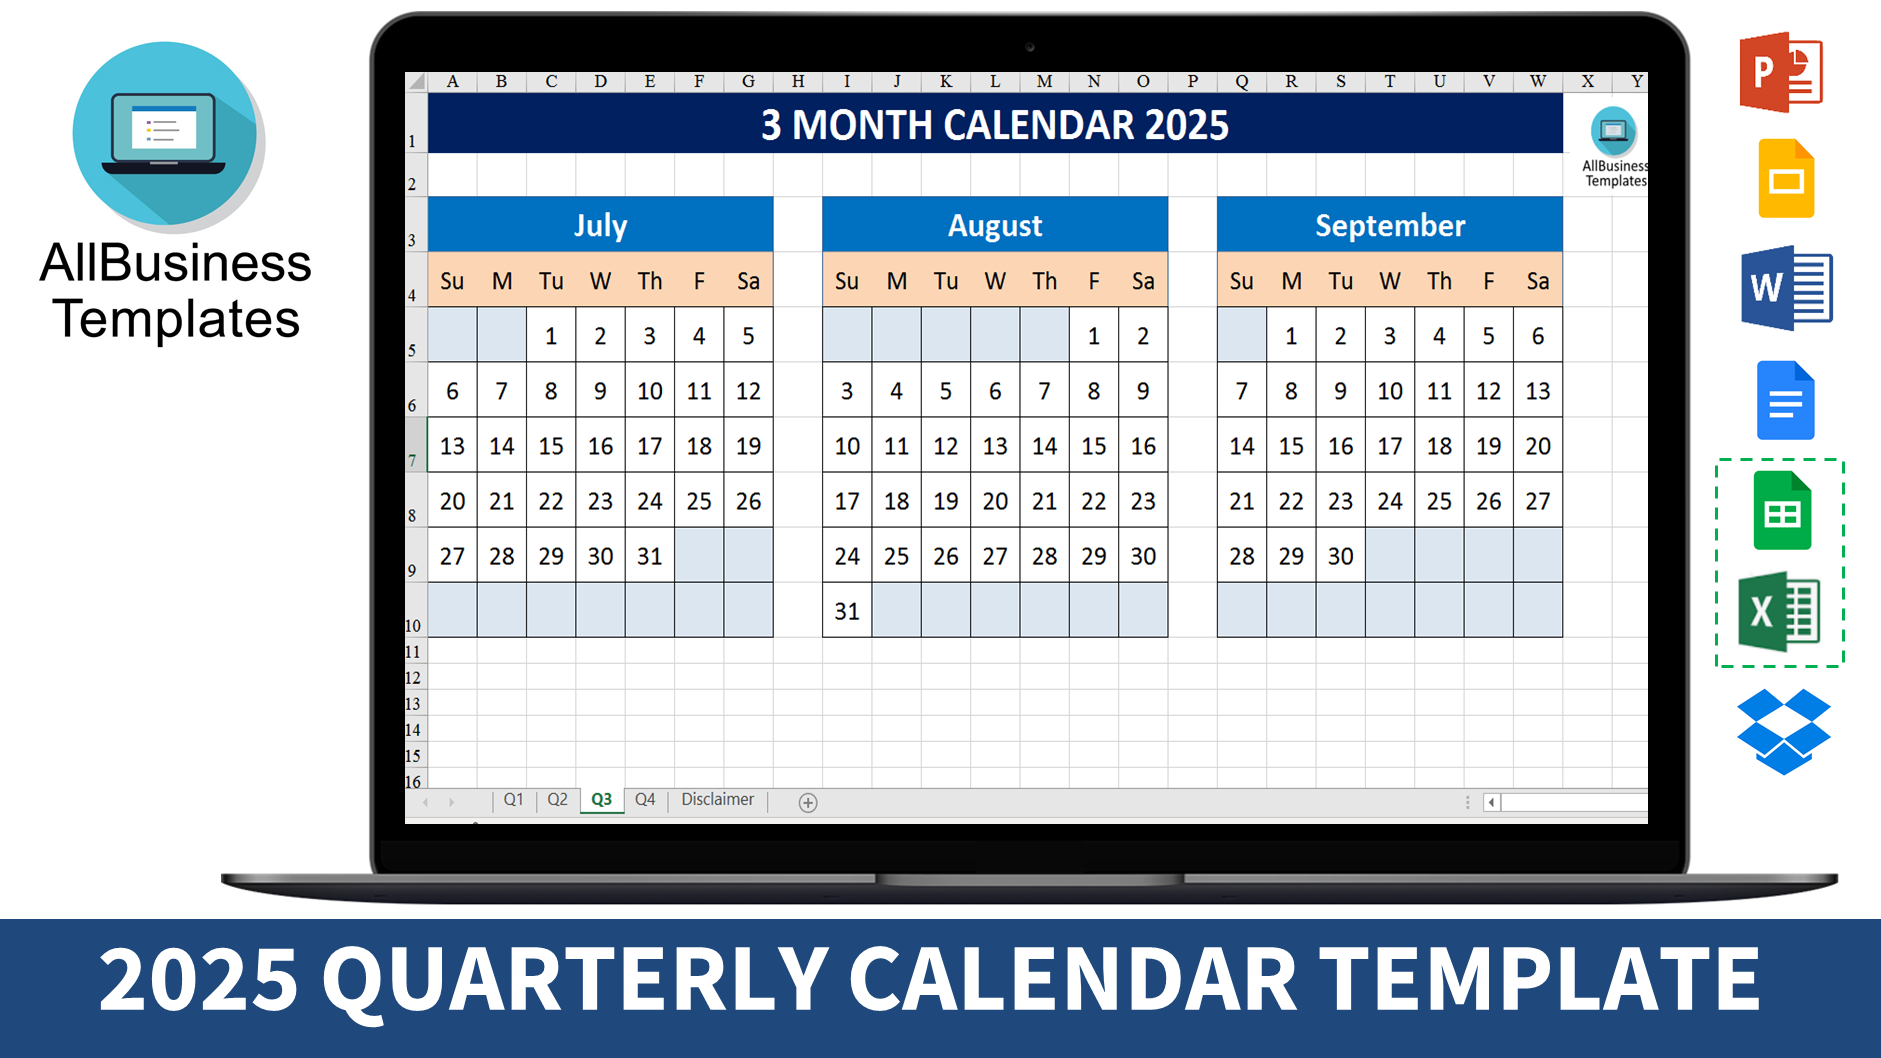 3 month calendar 2025 plantilla imagen principal